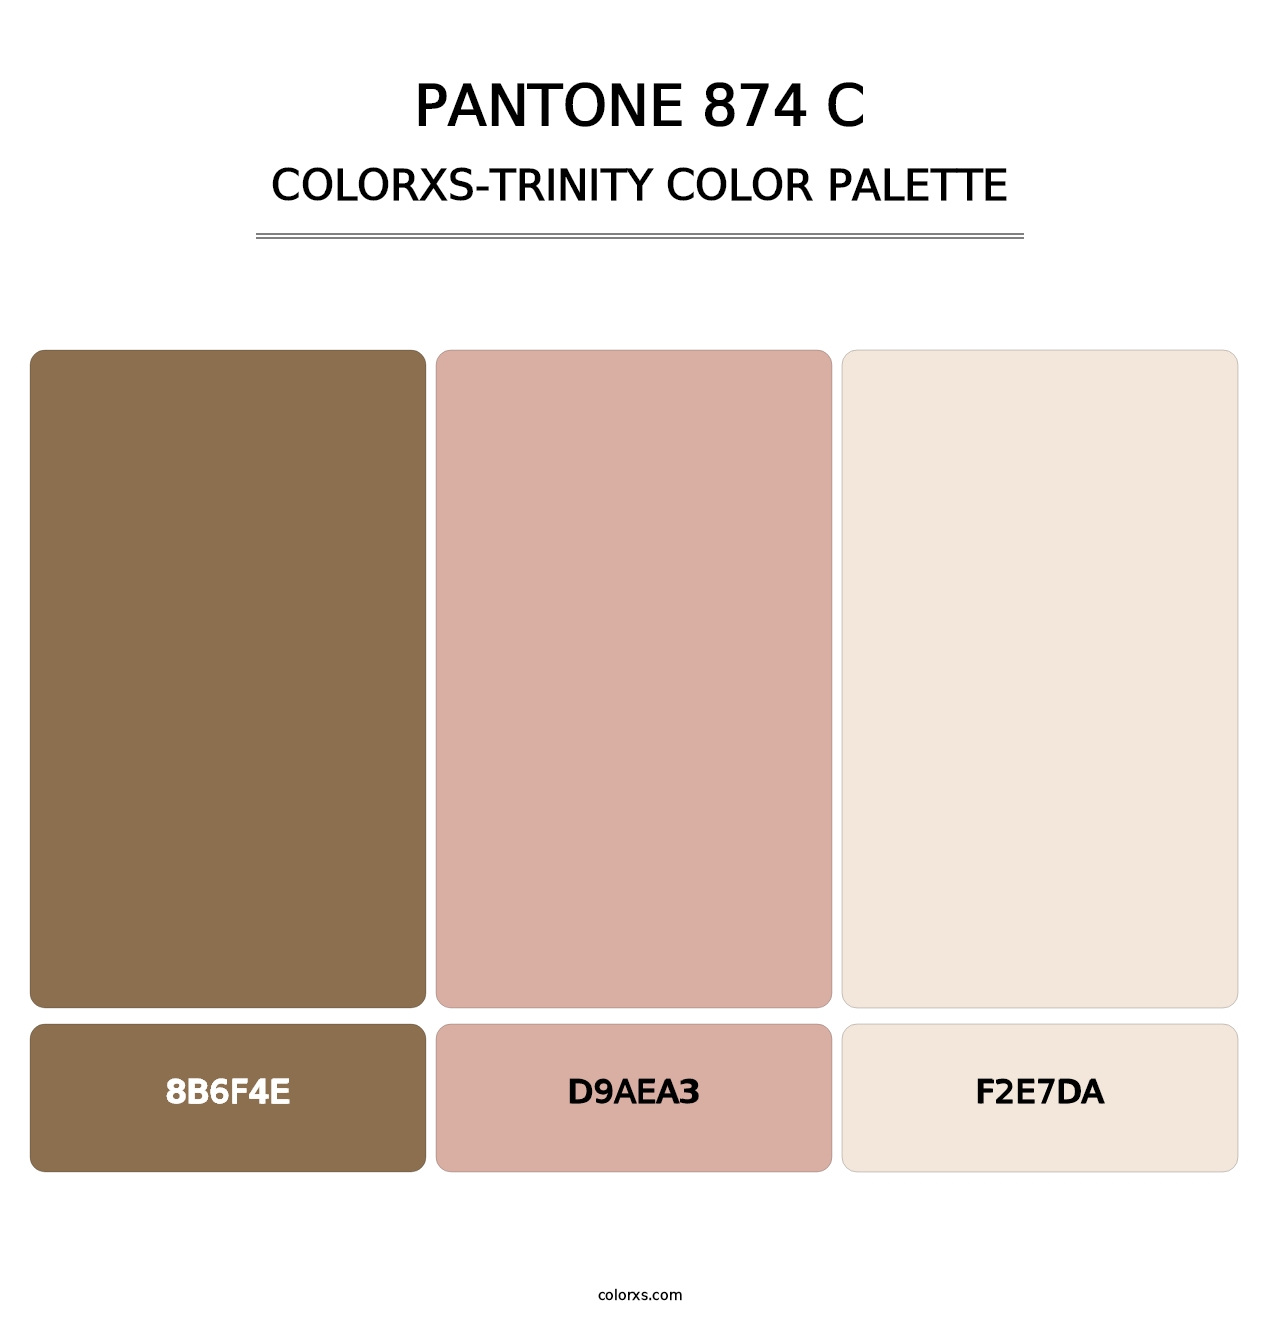 PANTONE 874 C - Colorxs Trinity Palette